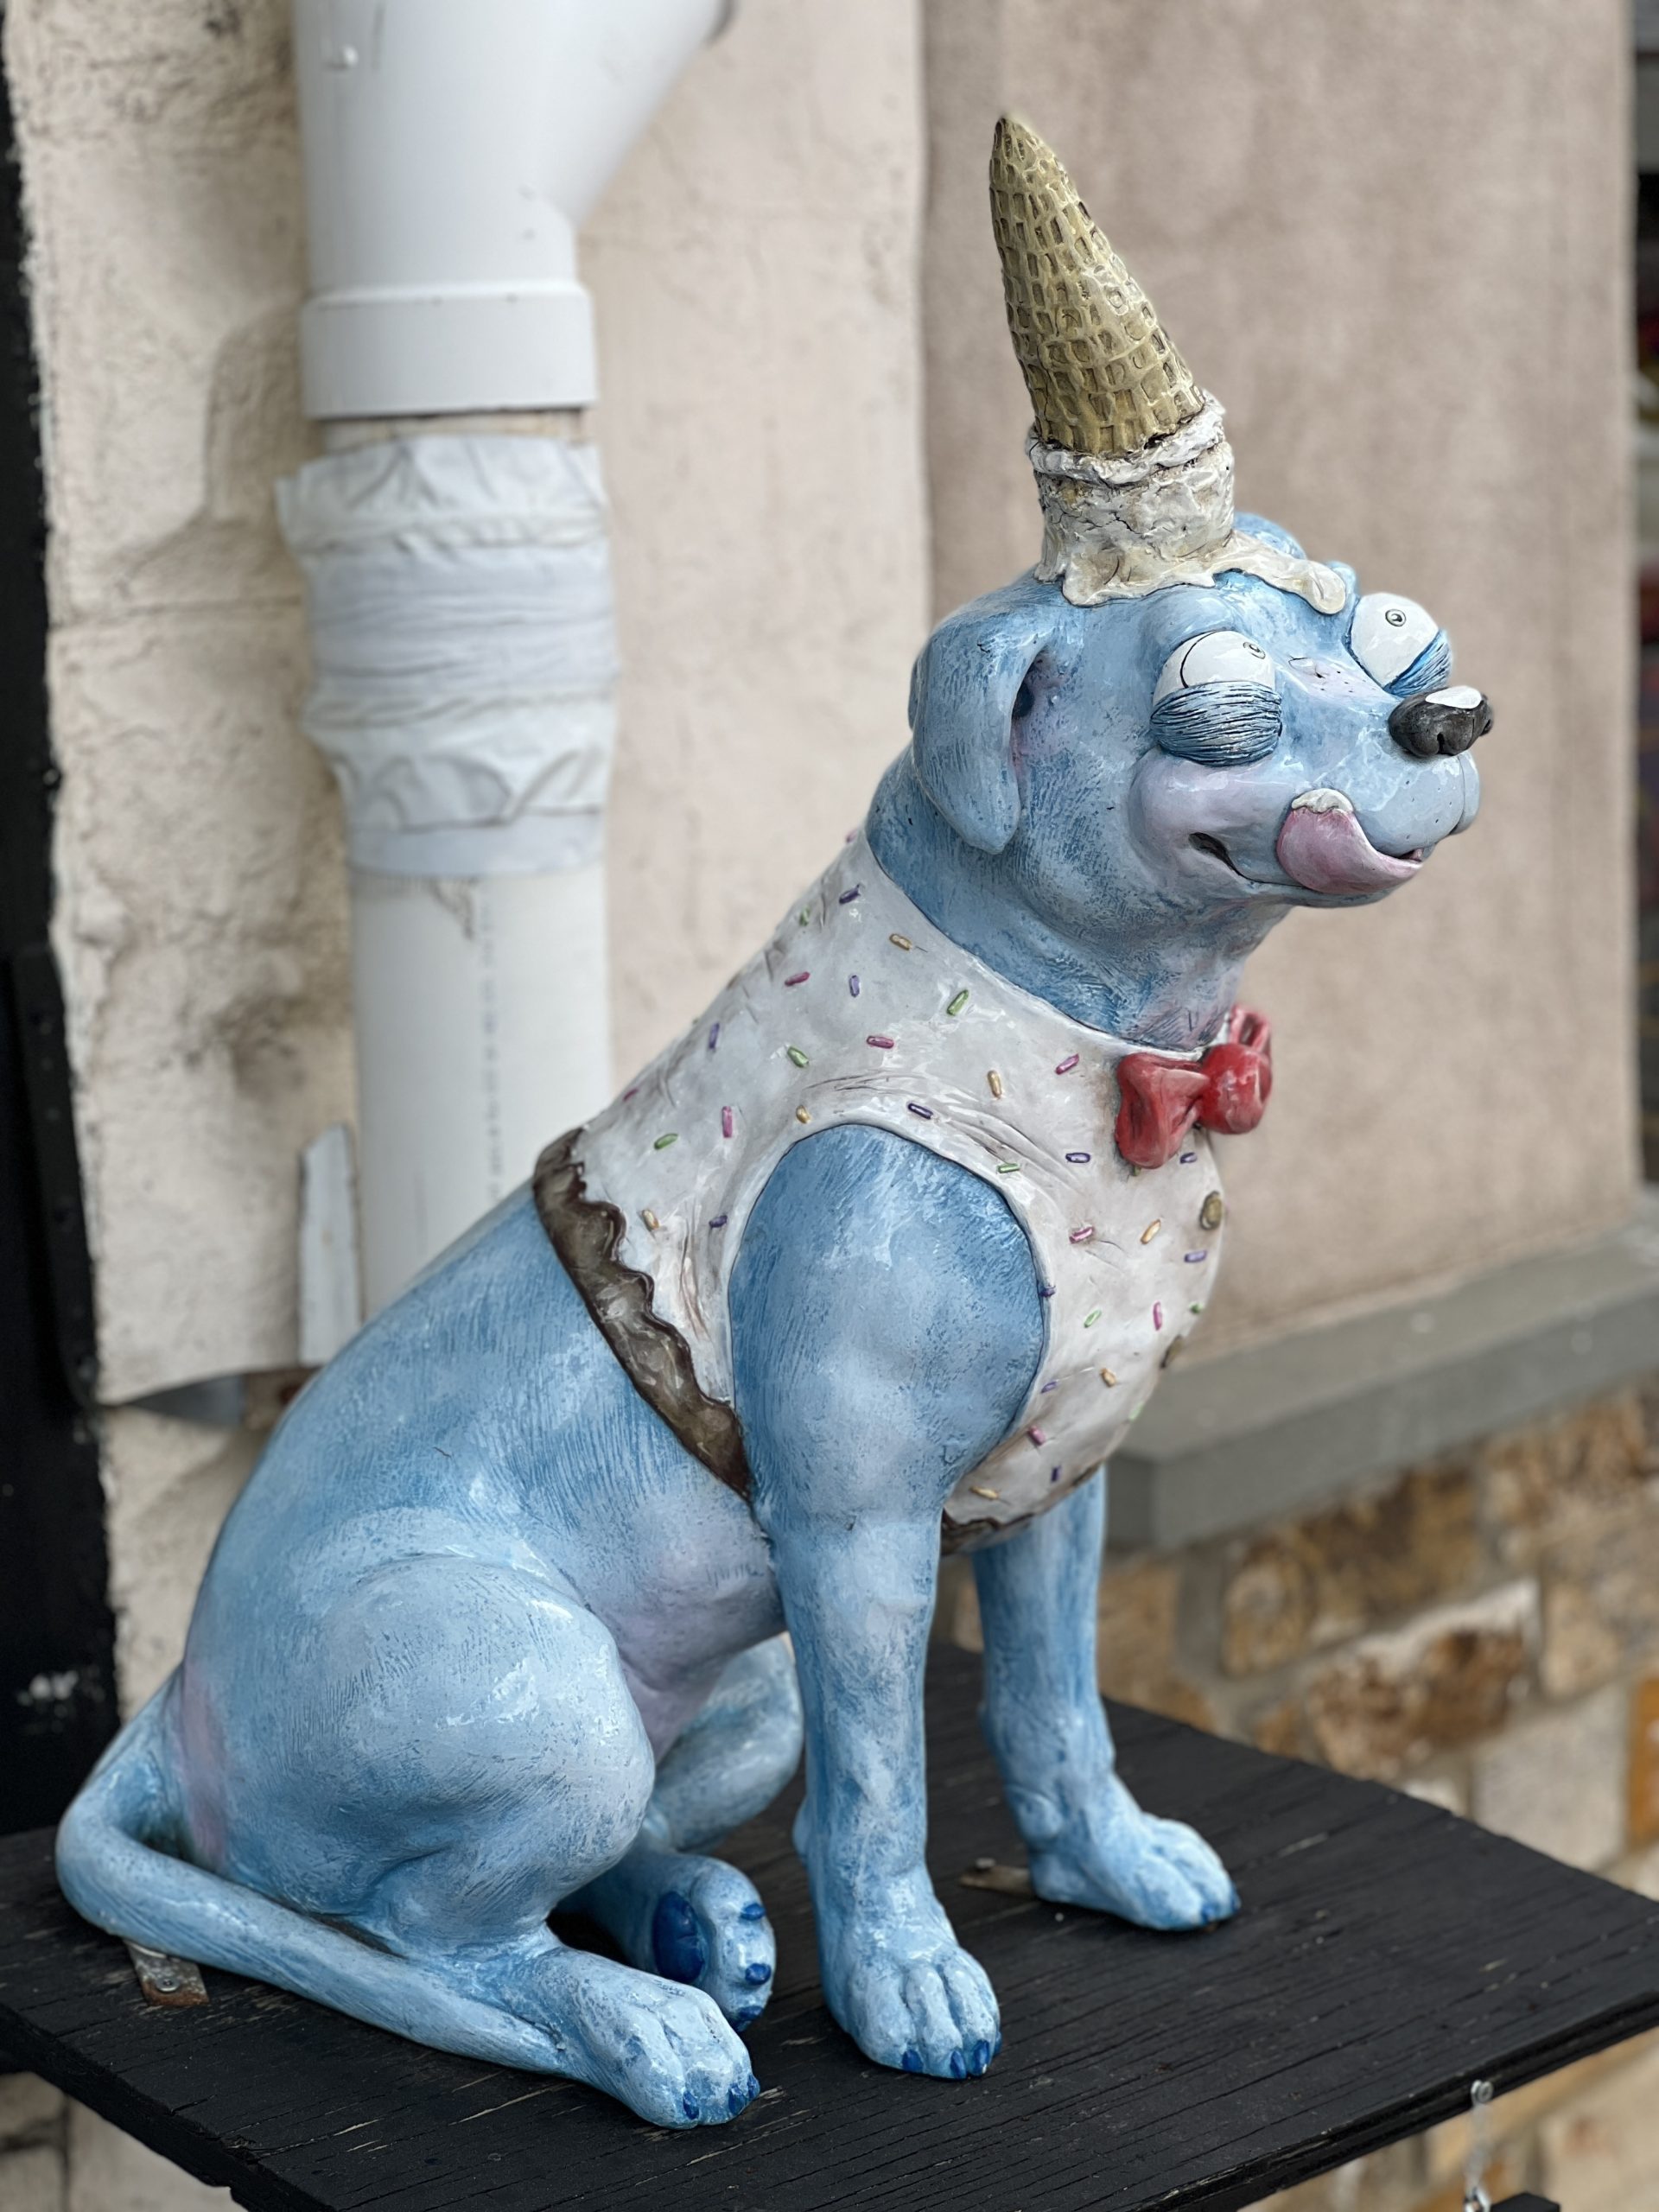 Dog Days of Summer Sculptures in Boonton ~